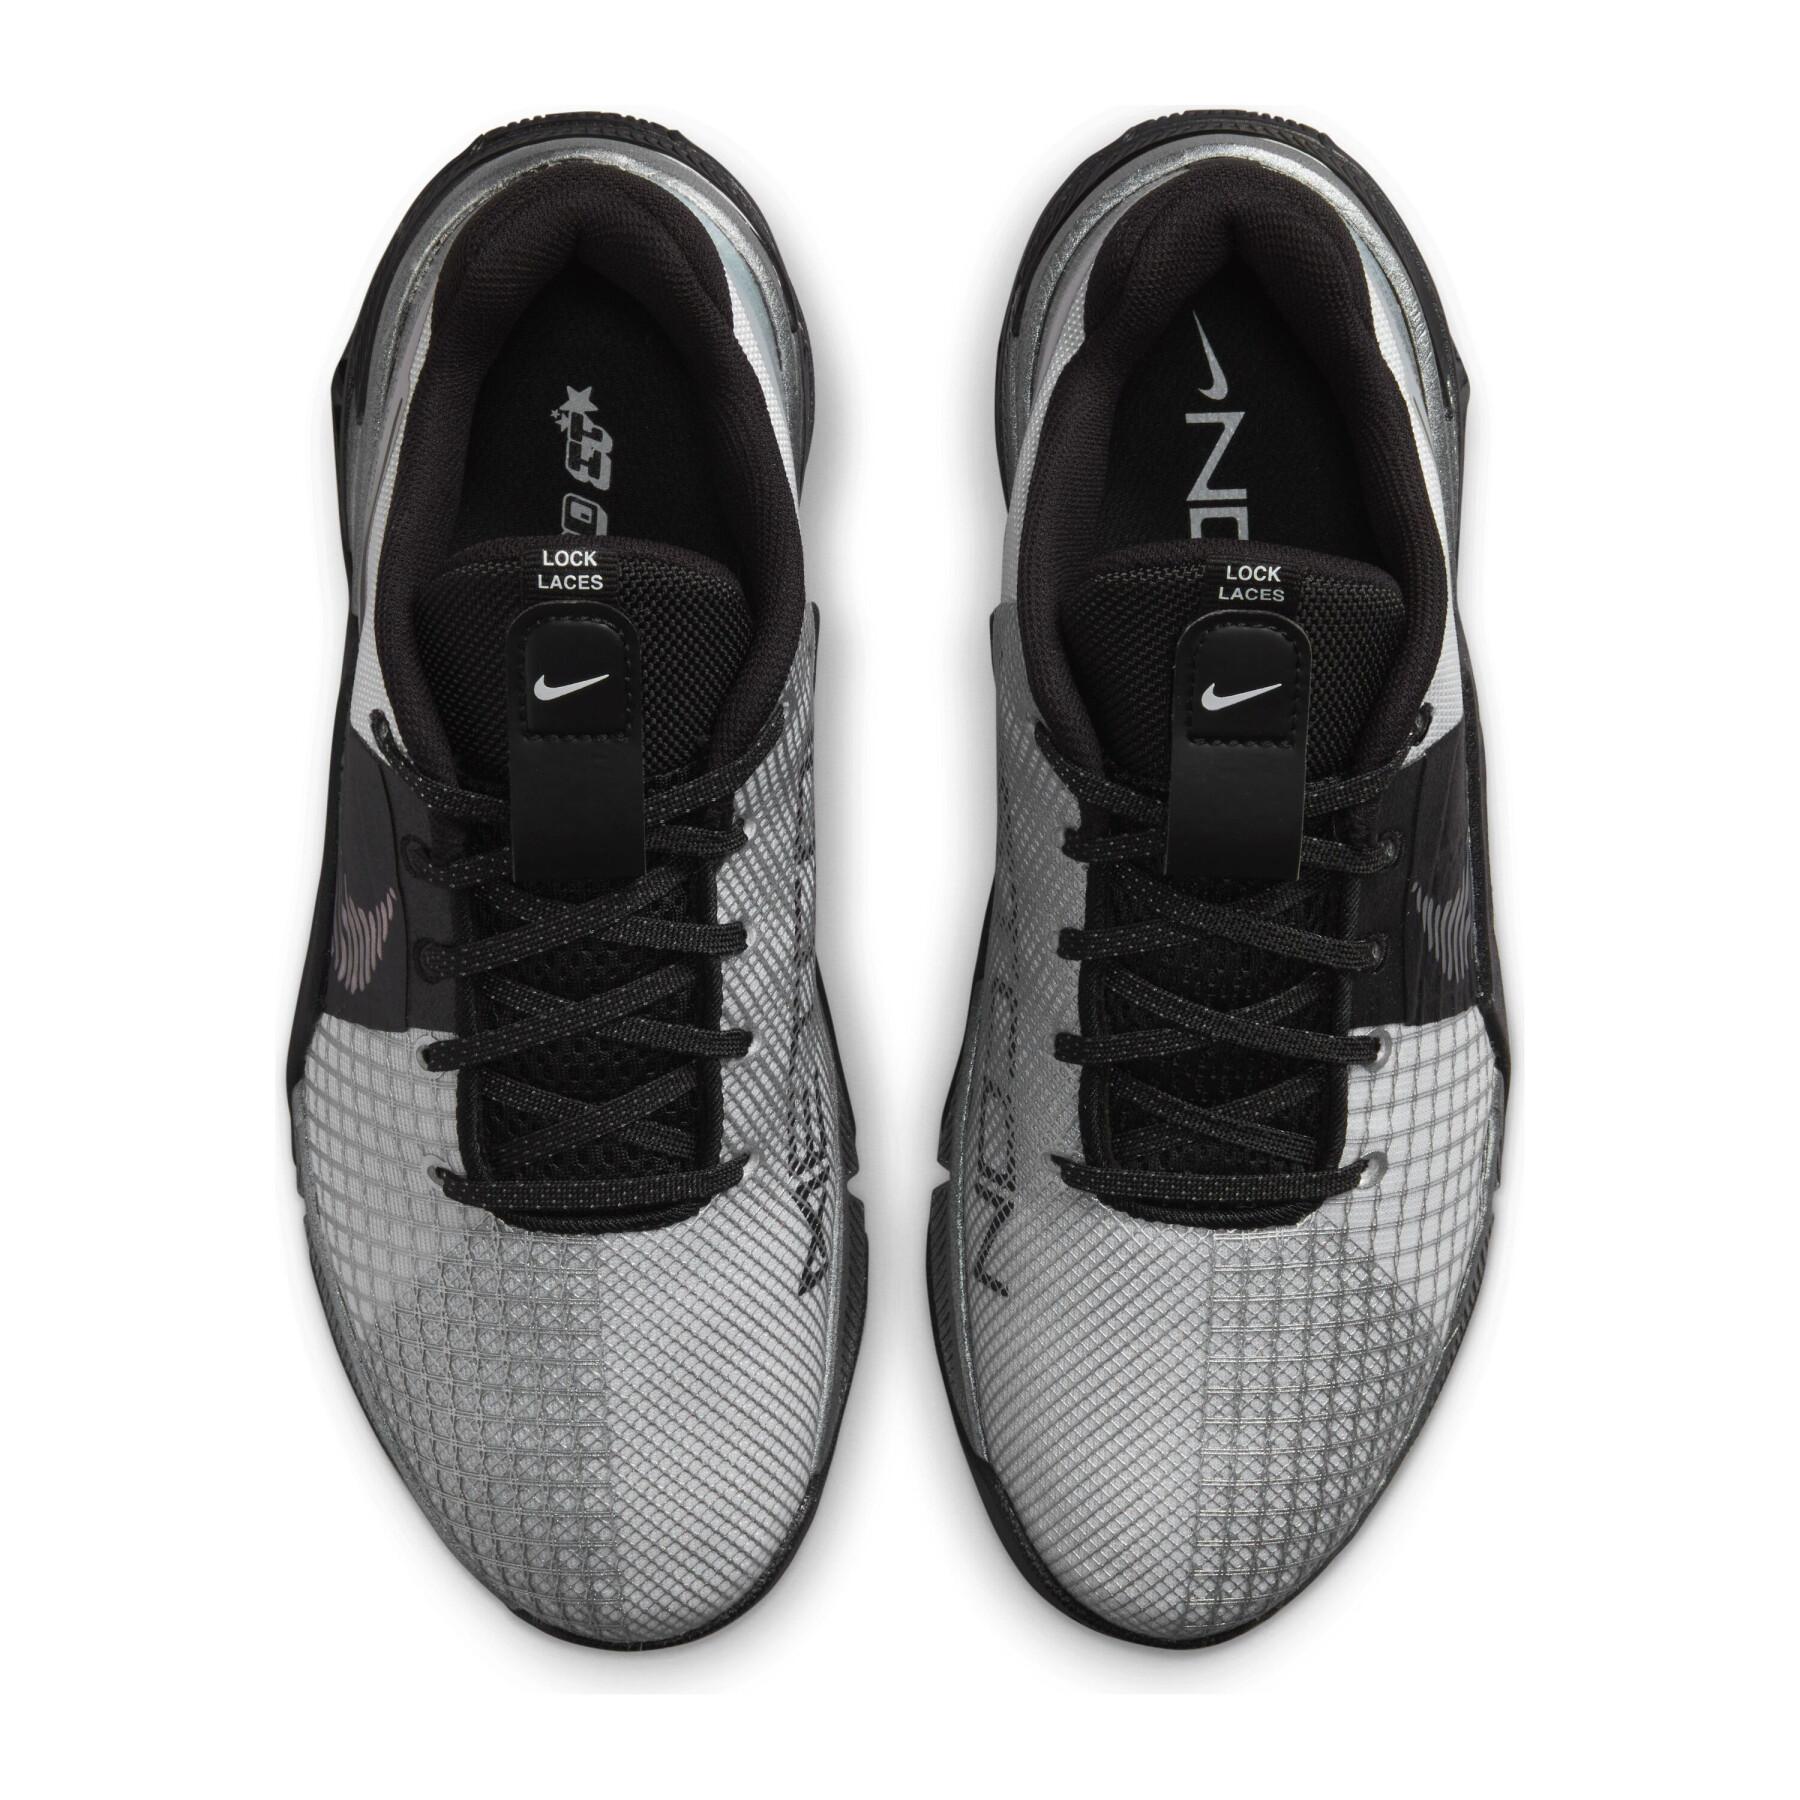 Women's cross training shoes Nike Metcon 8 Premium